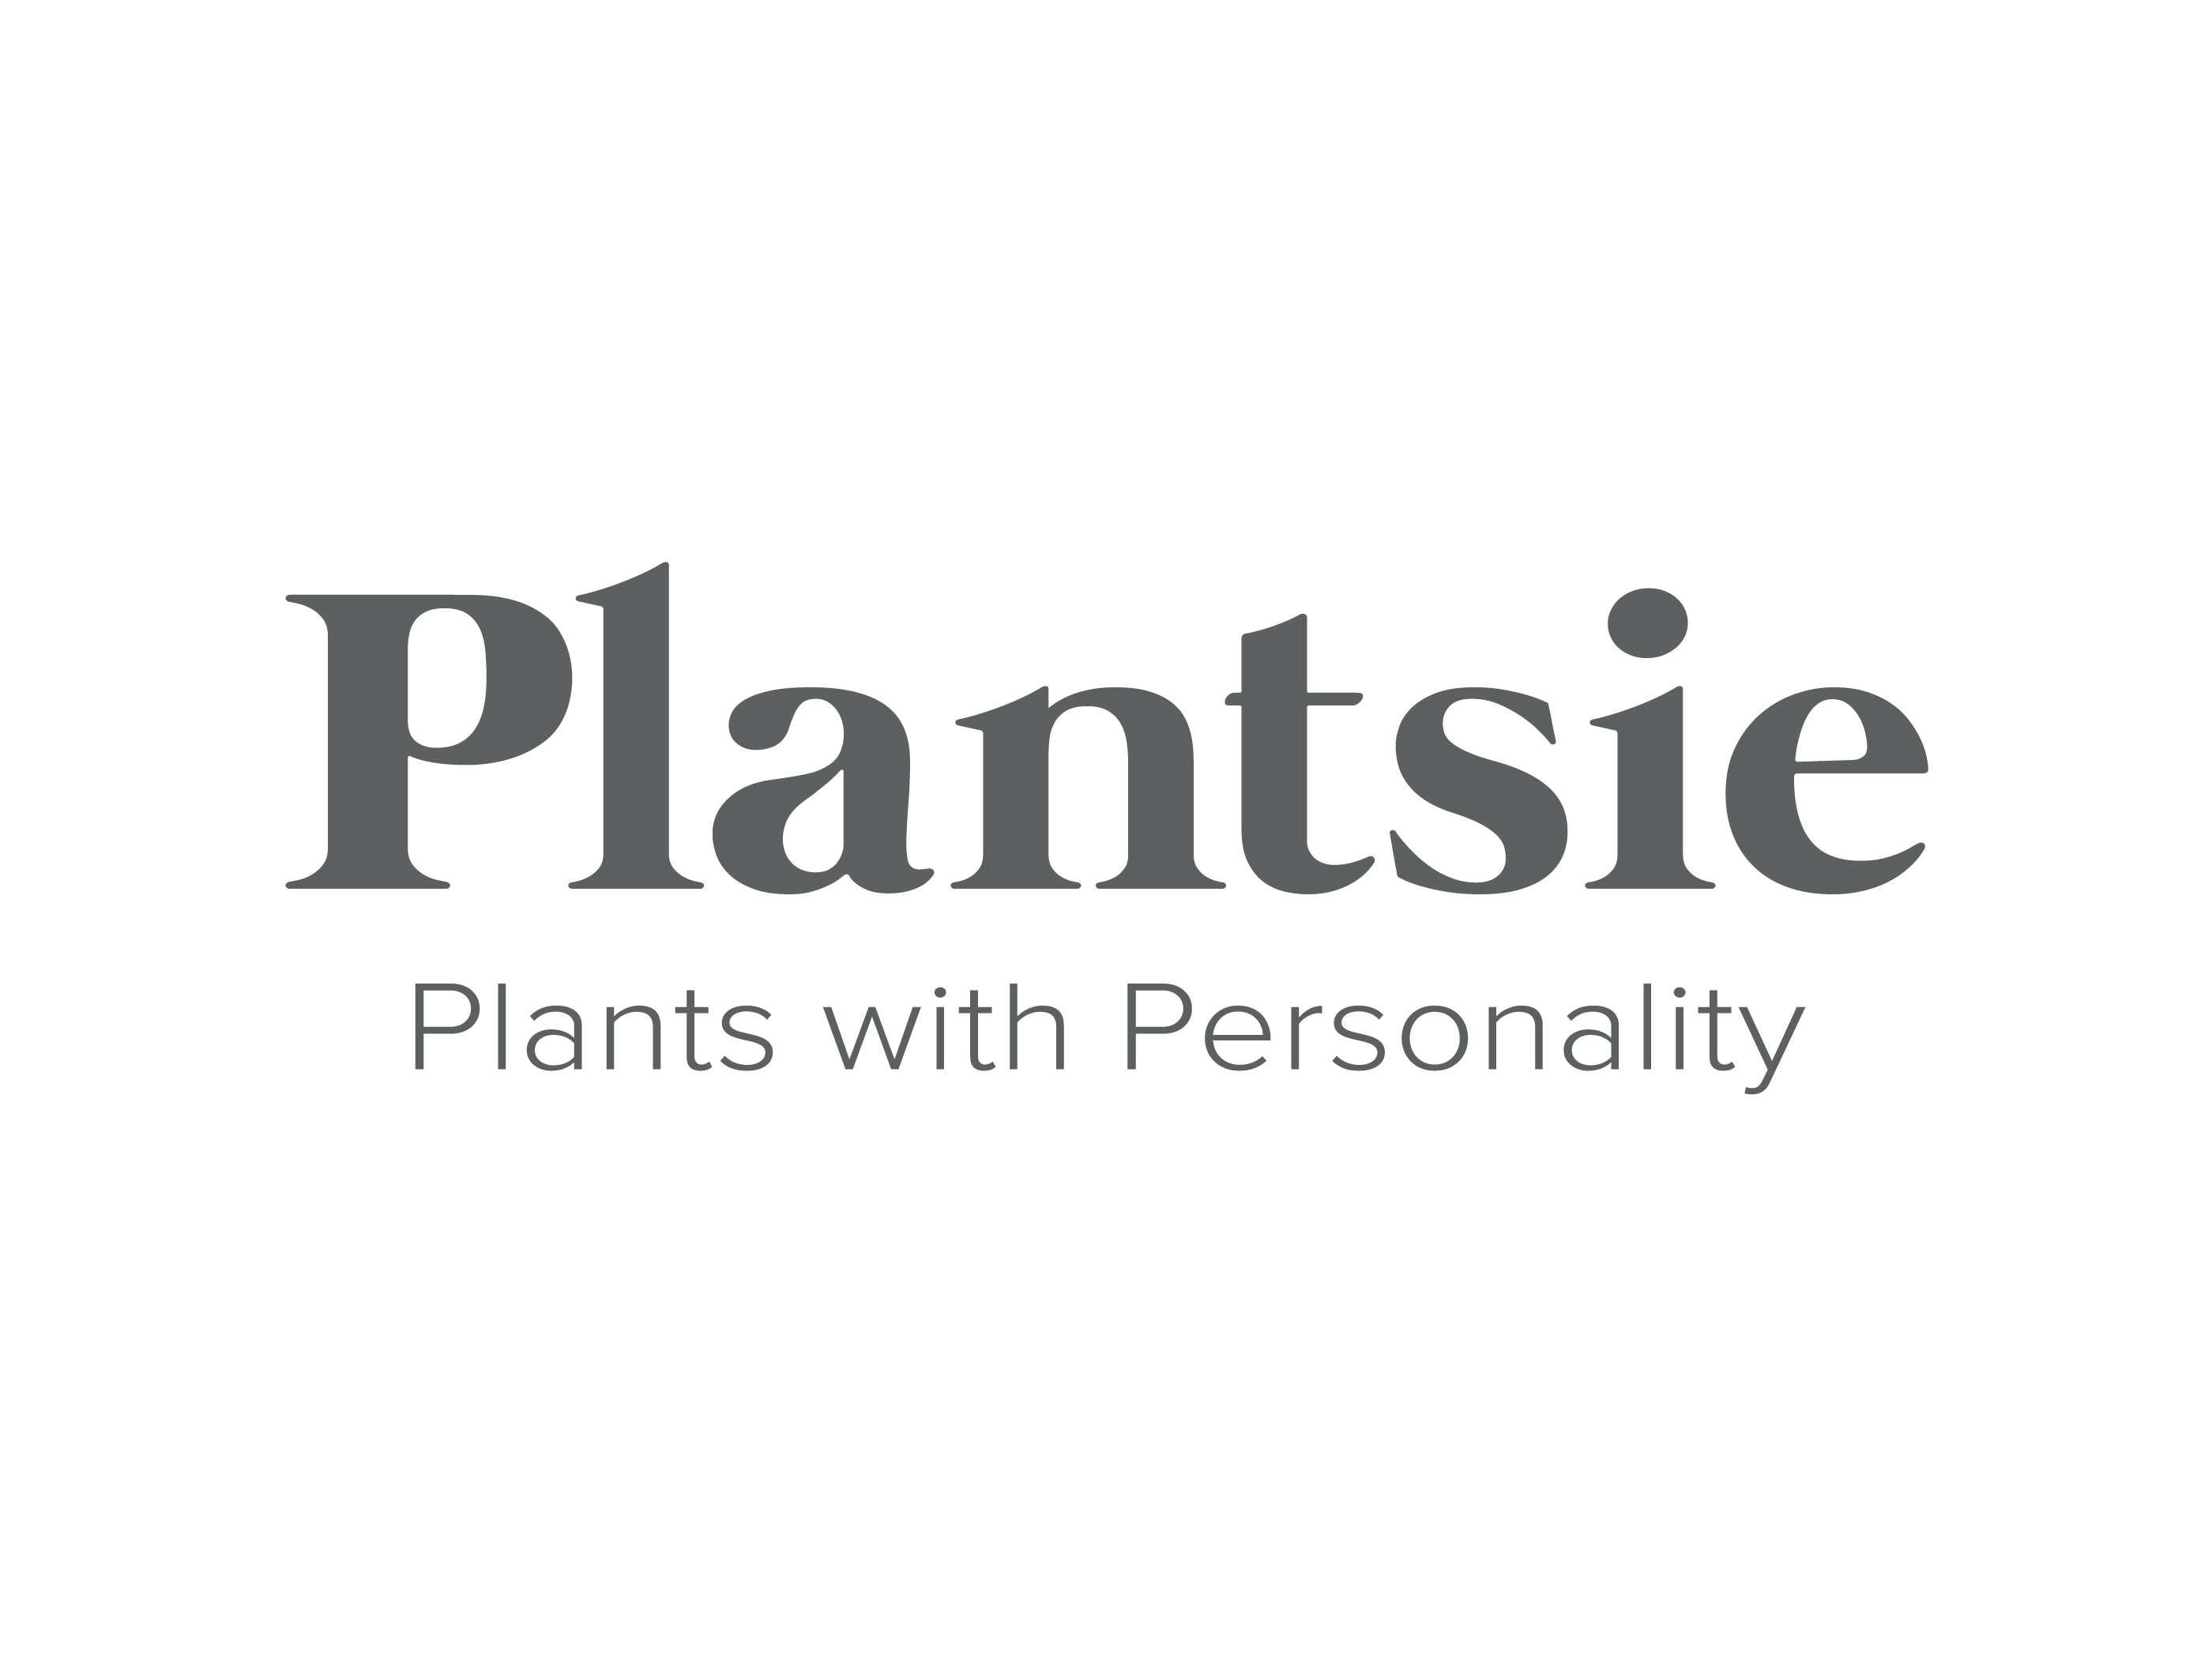 Plantsie